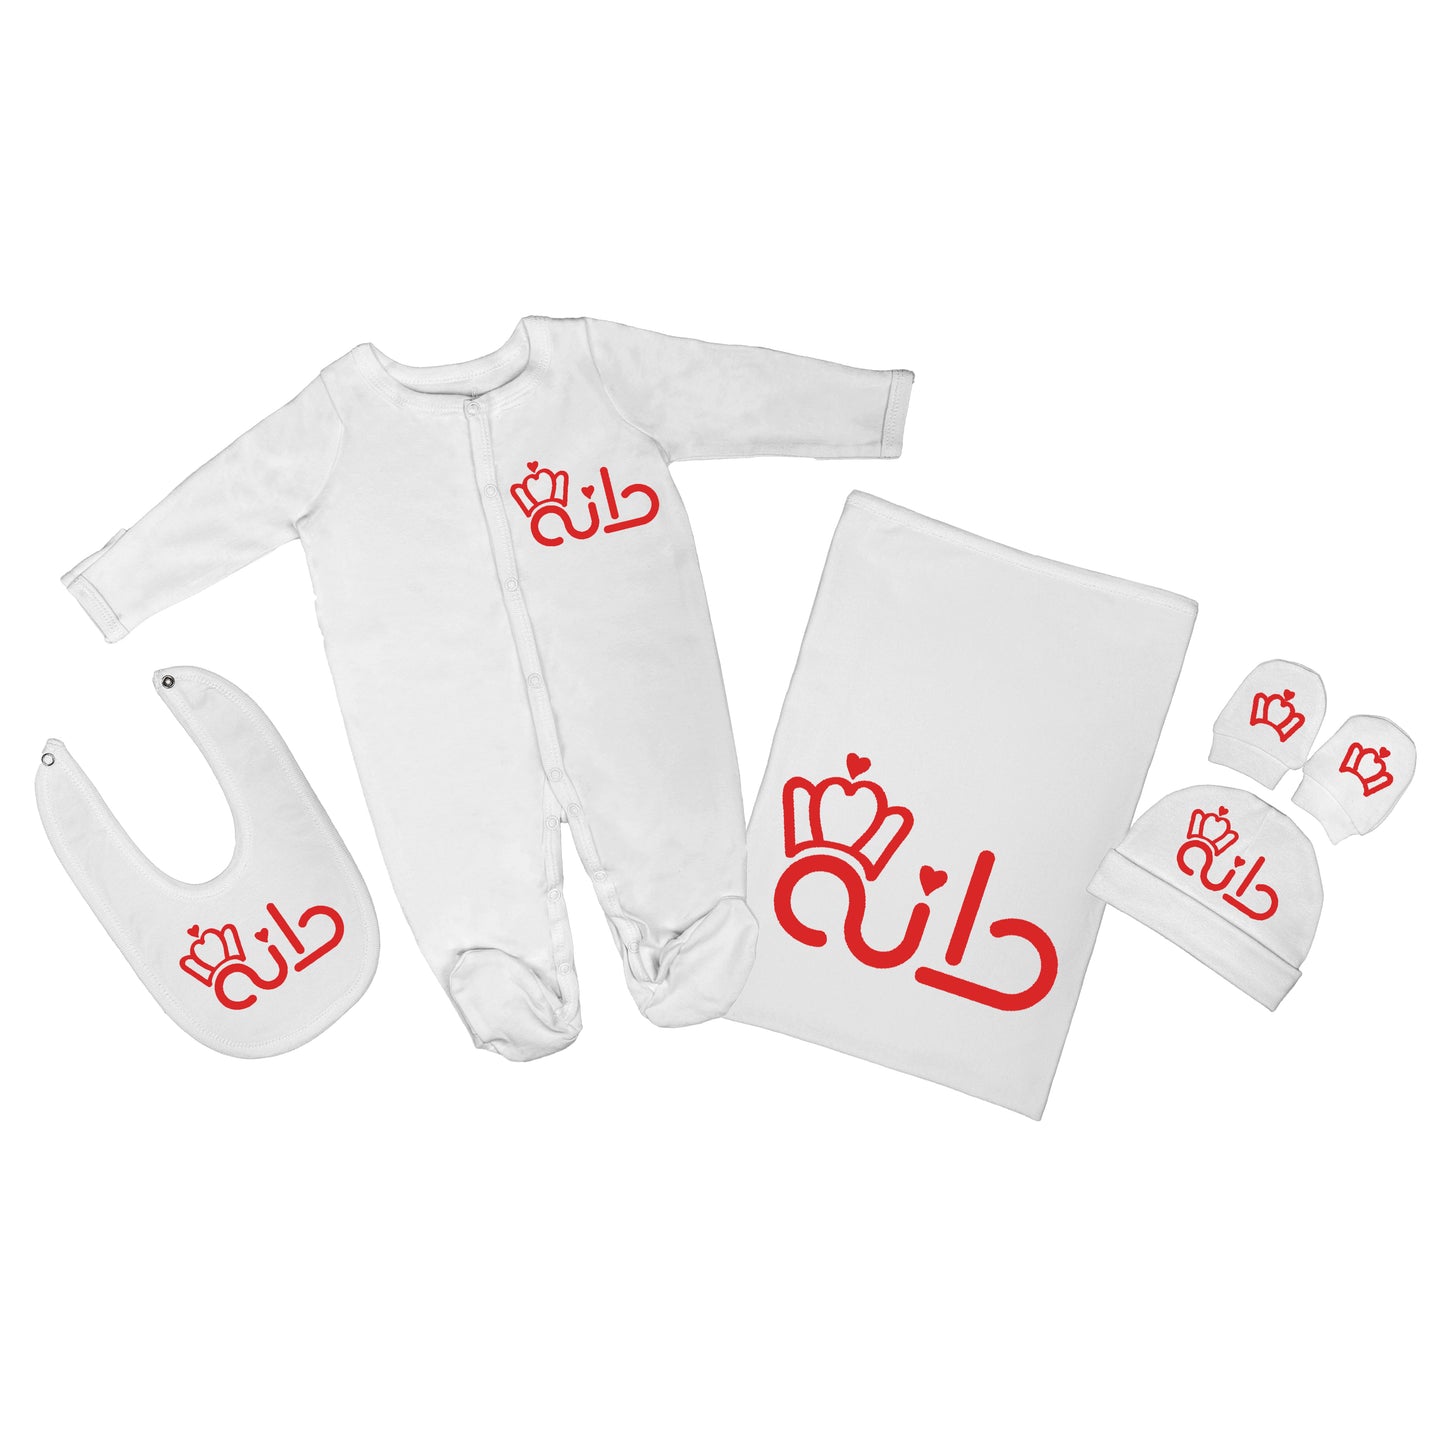 Personalized Baby Clothing Set (Blanket, Sleepsuit, Beanie, Bib, Mittens) - Princess